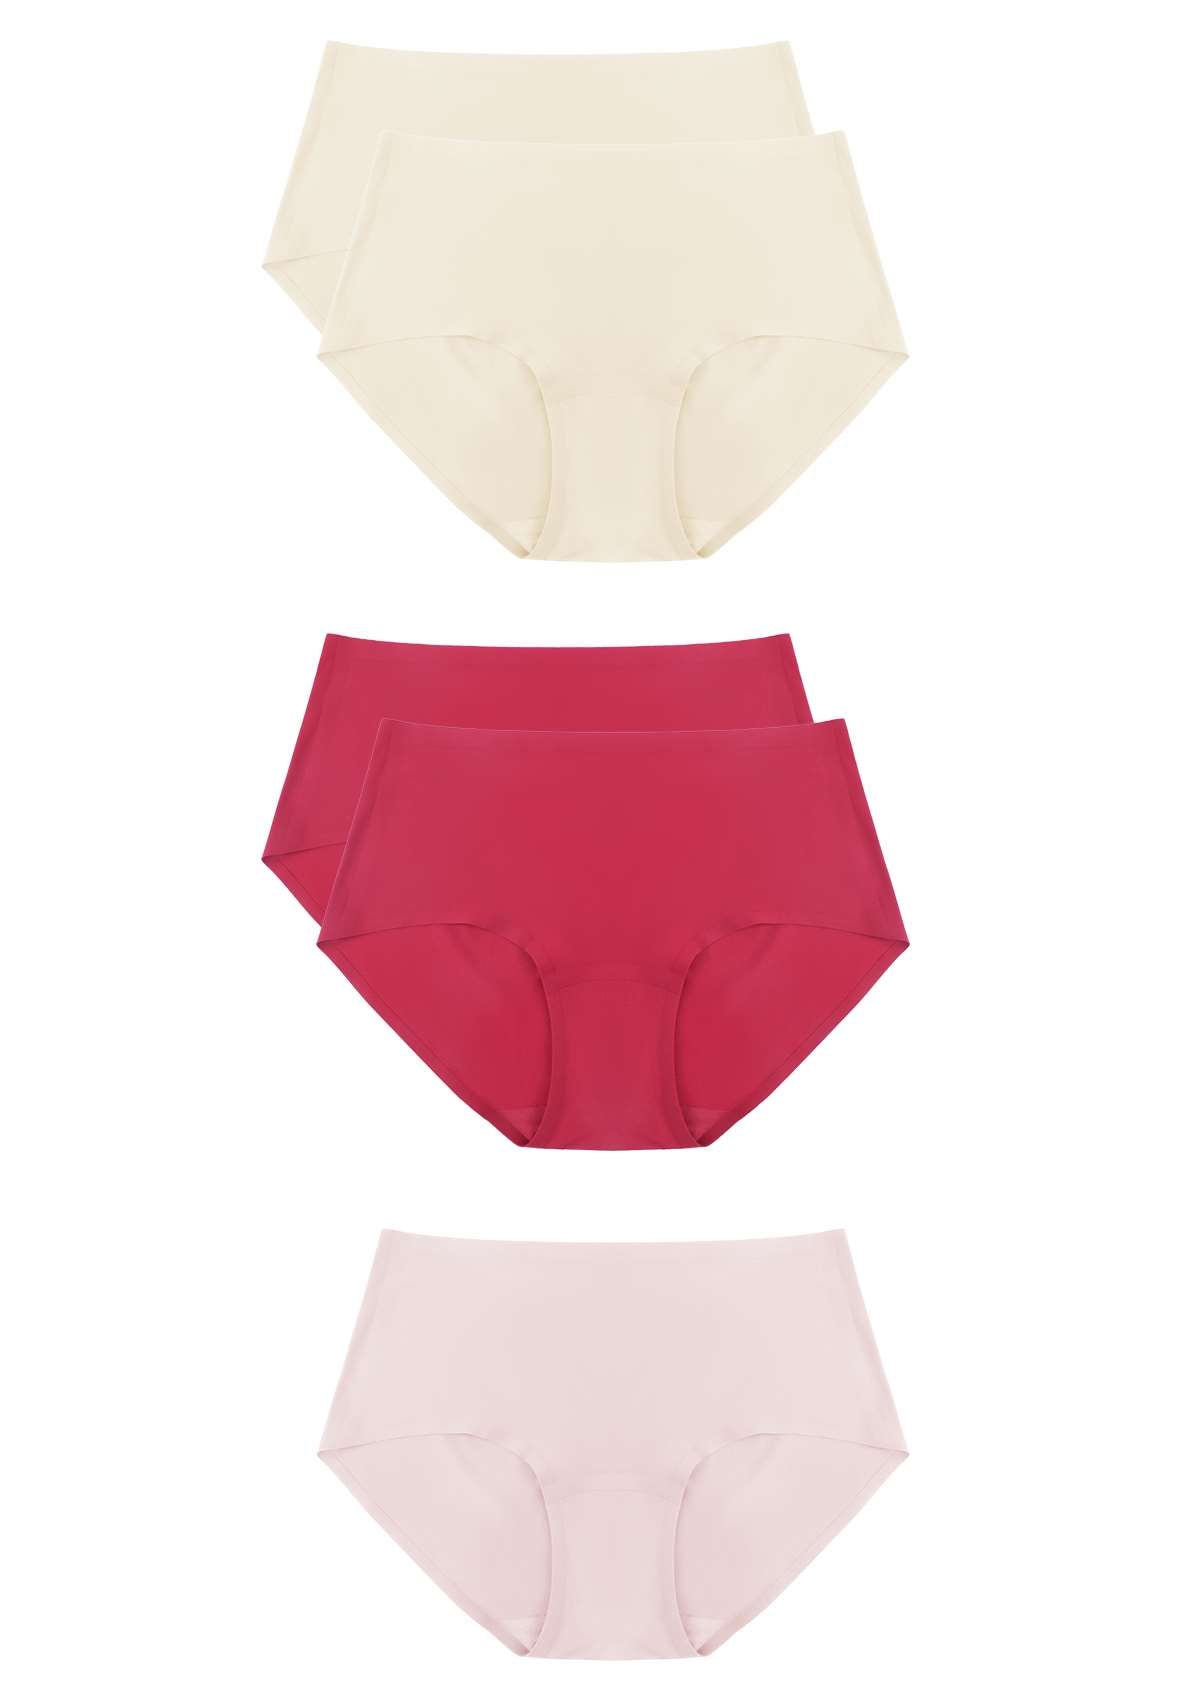 HSIA FlexiFit Soft Stretch Seamless Brief Underwear Bundle - 10 Packs/$35 / L-2XL / 2*Peach Beige+2*Red+Dusty Rose